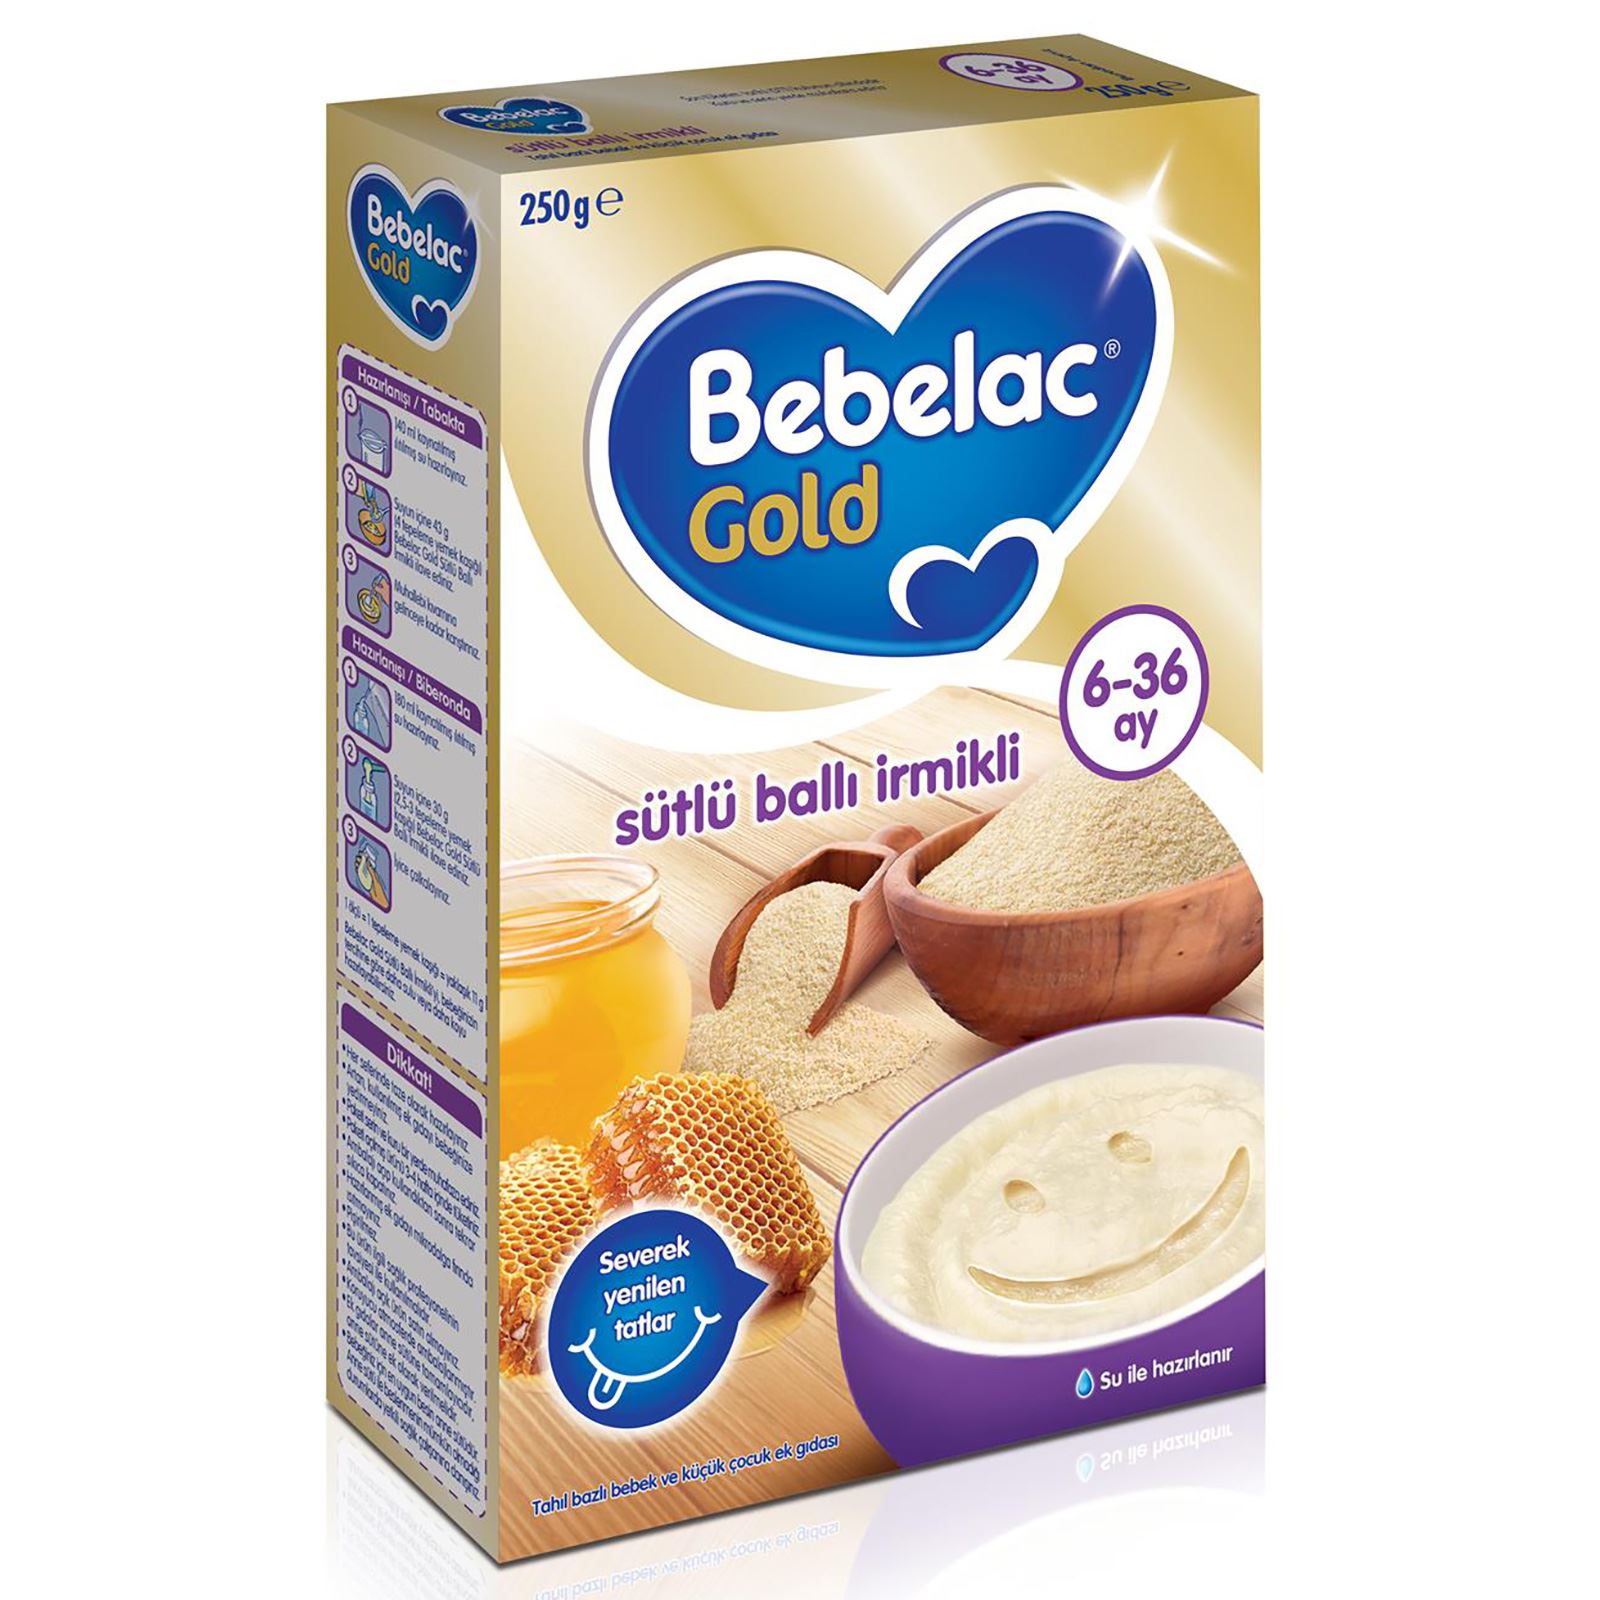 Bebelac gold